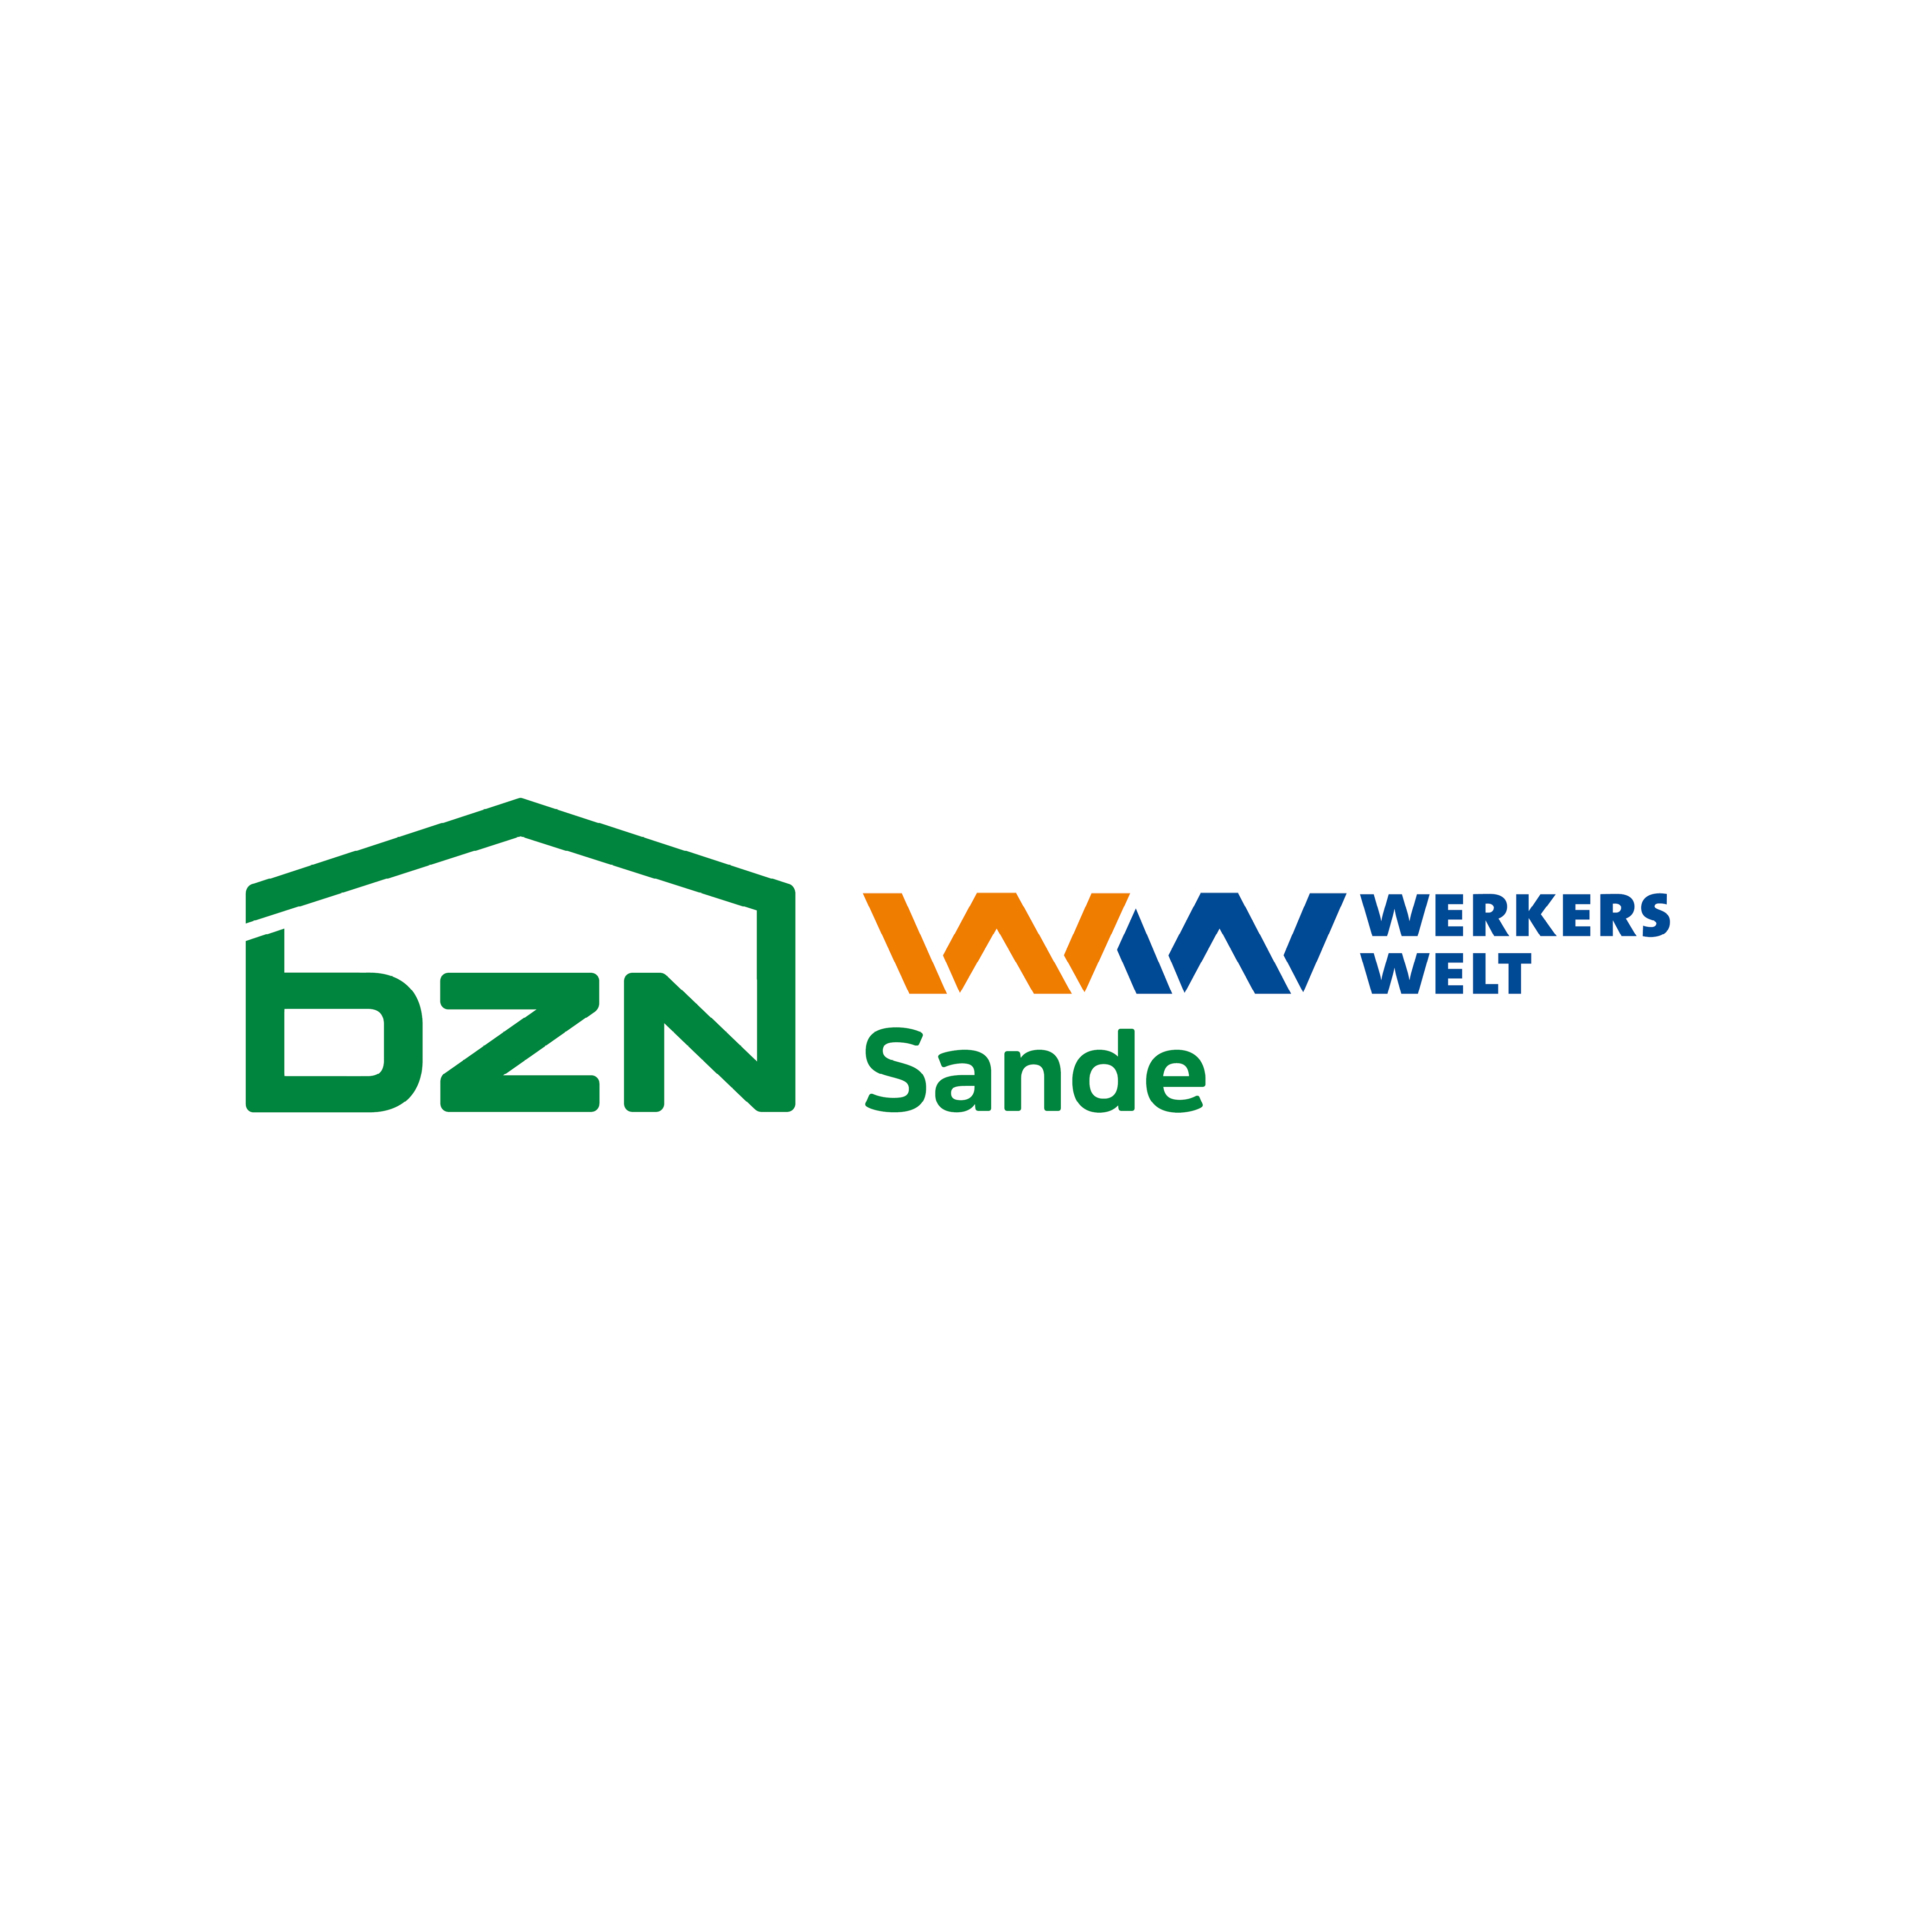 Werkers Welt Sande - BZN Bauzentrum Sande GmbH & Co. KG Logo